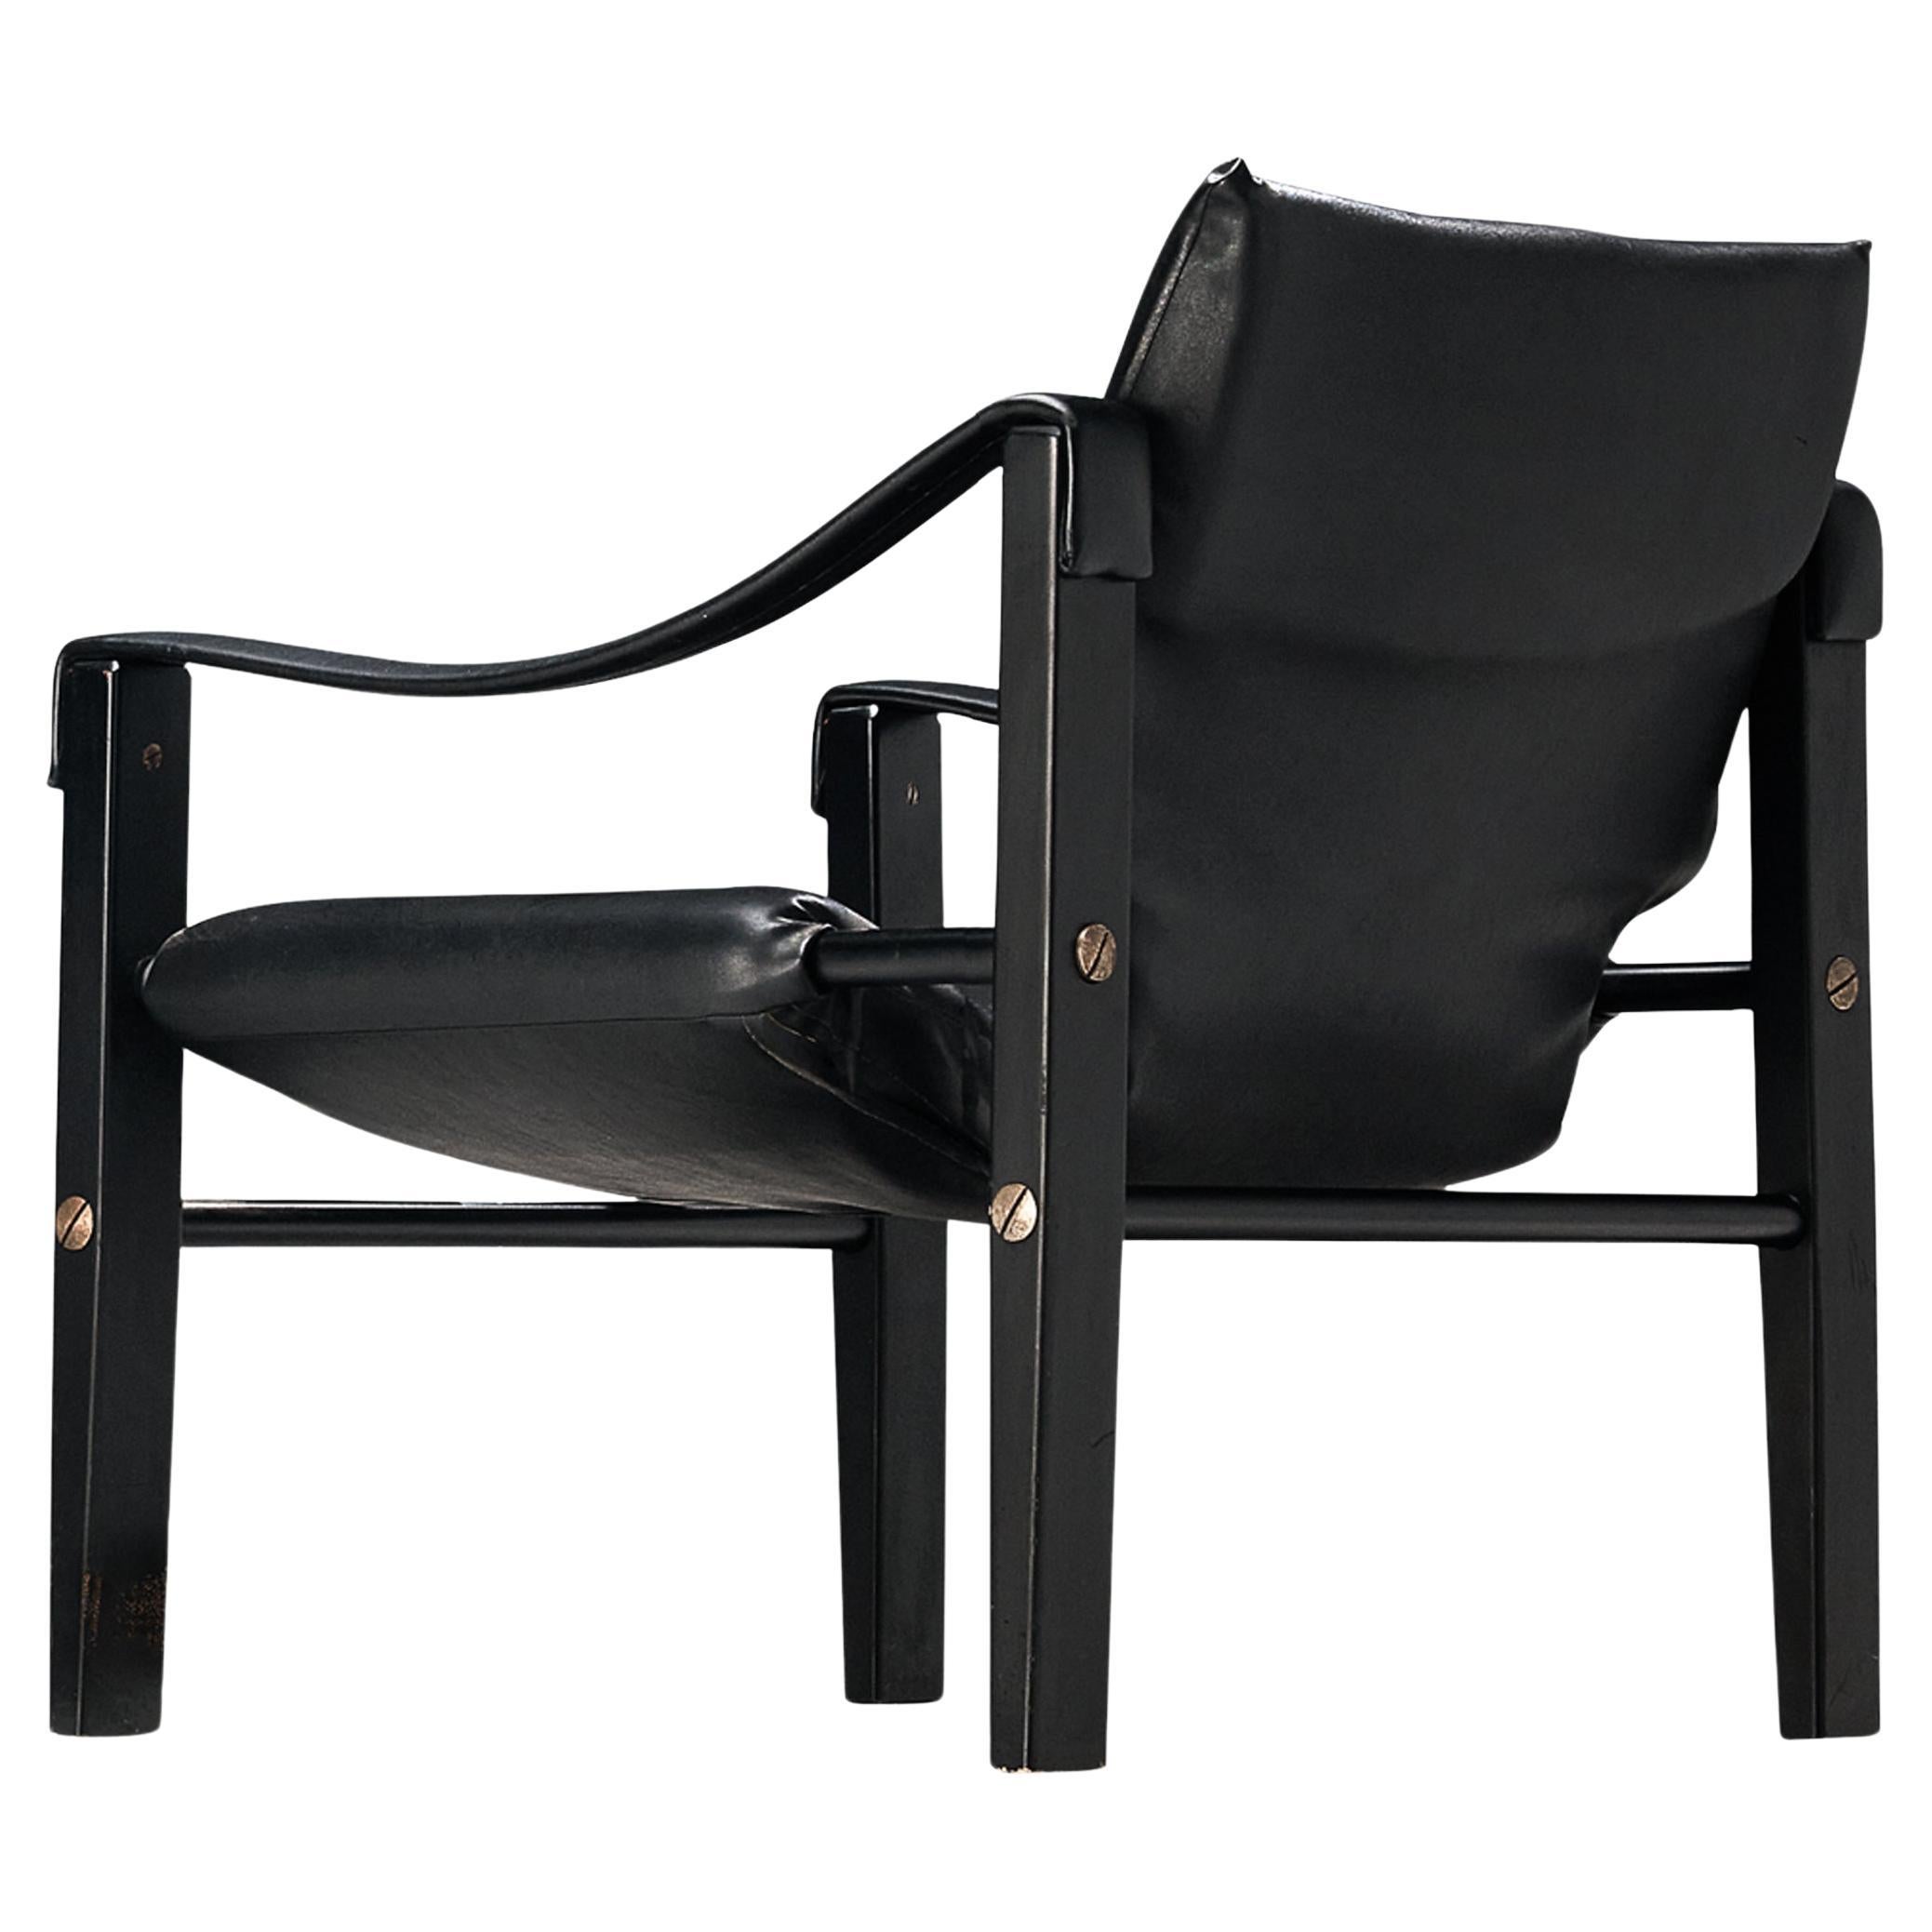 'Safari' Lounge Chair in Black Vinyl 